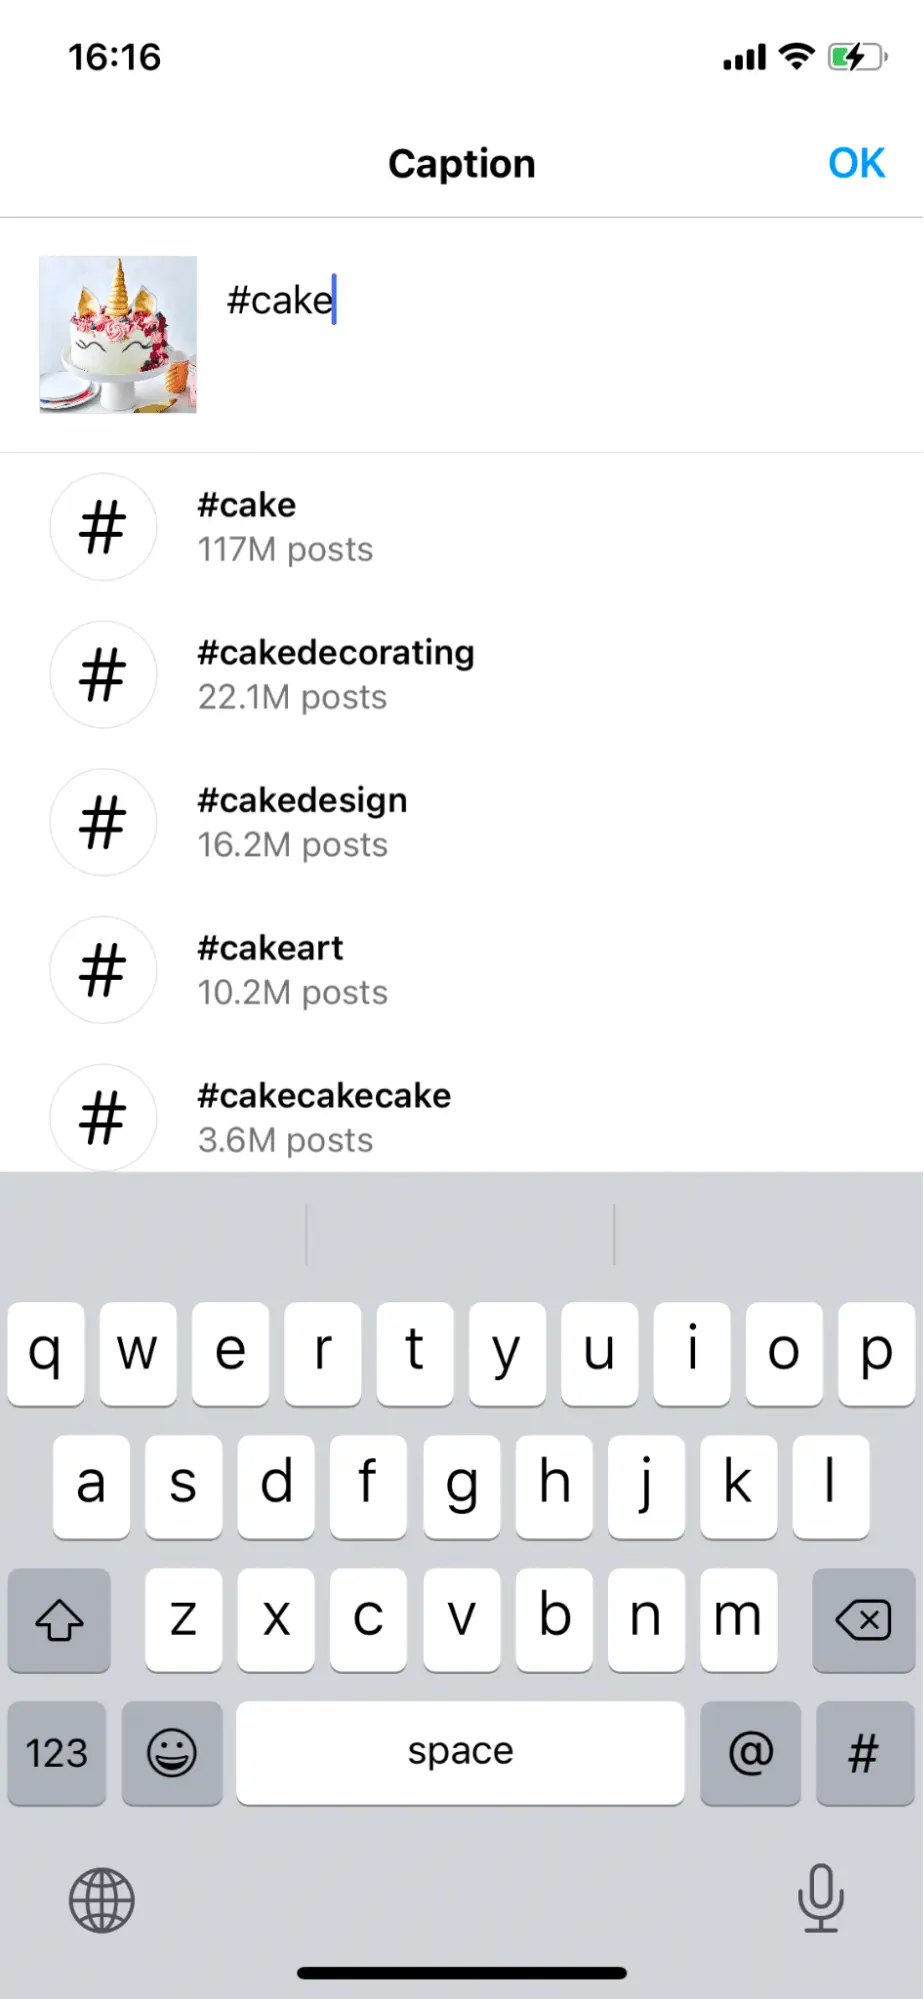 Screenshot shows adding hashtag to a post caption